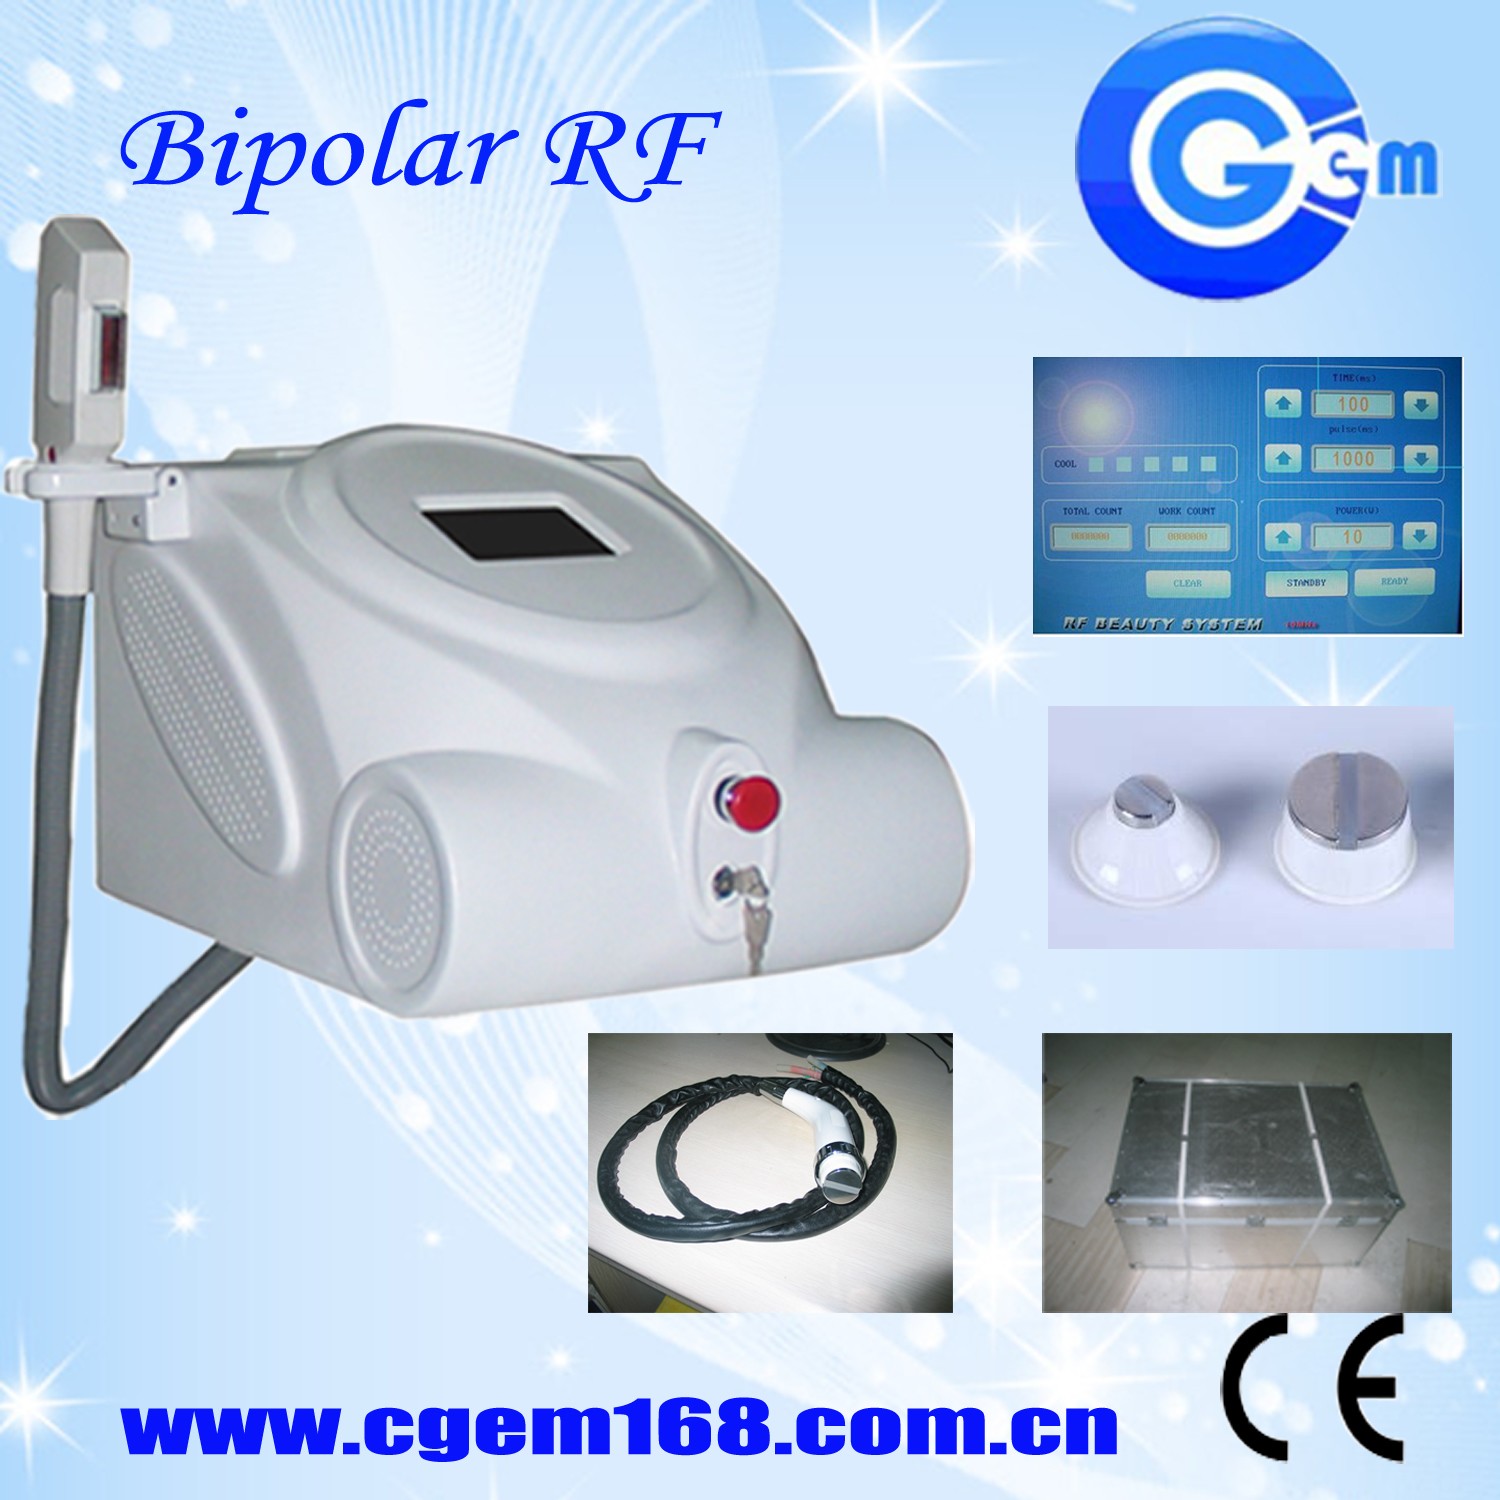 Bipolar RF skin rejuvenation beauty equipment